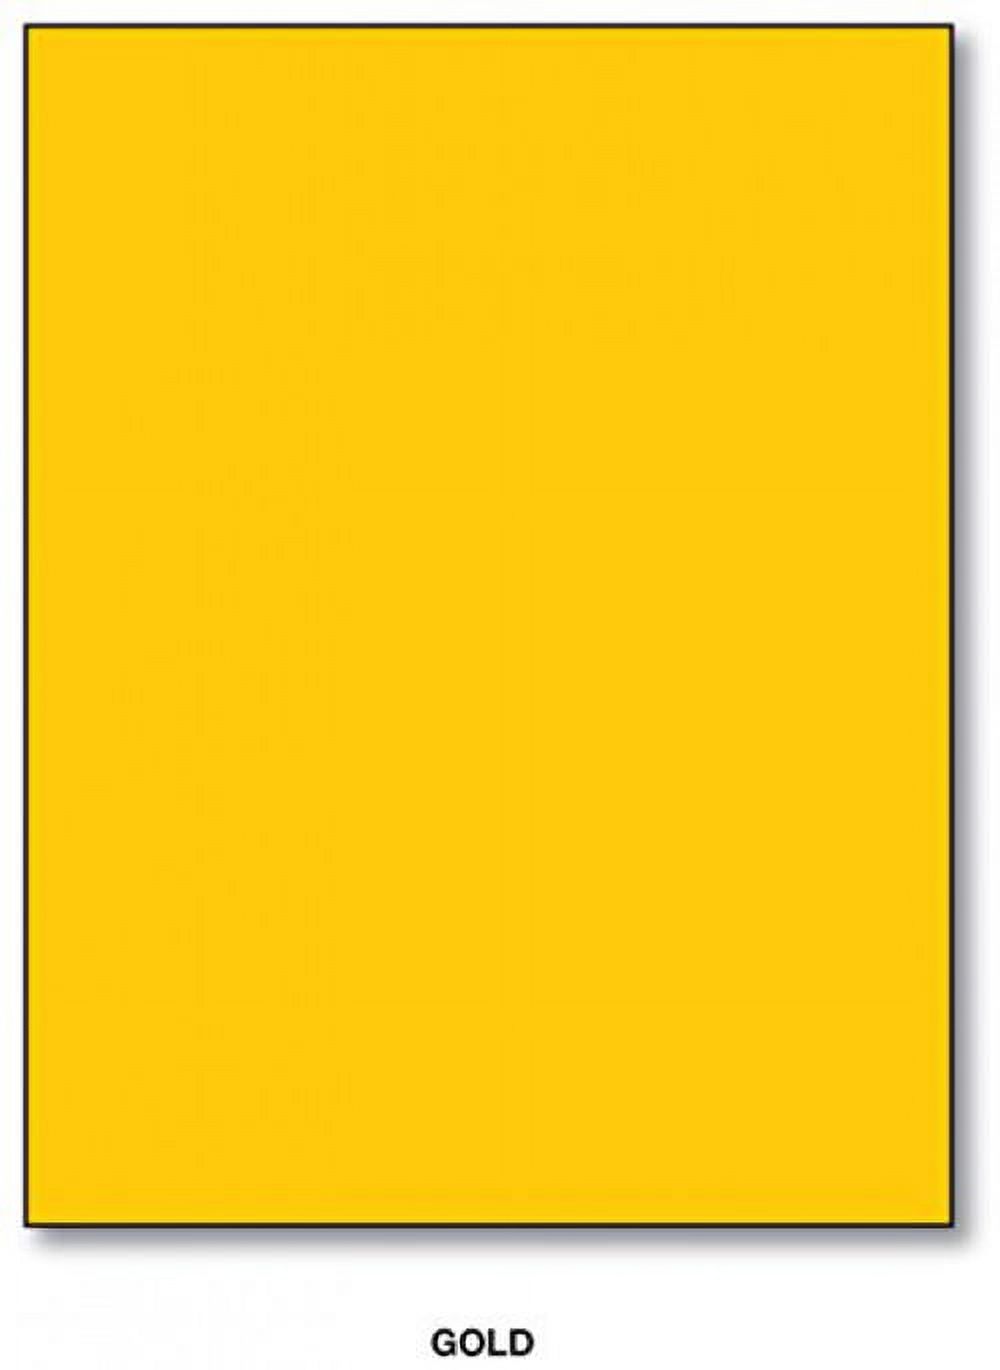 Mohawk BriteHue Bright Color Paper | Gold | 24lb Bond / 60lb Text Paper |  8.5" x 11" (Letter Size) | 100 Sheets Per Pack - image 1 of 2